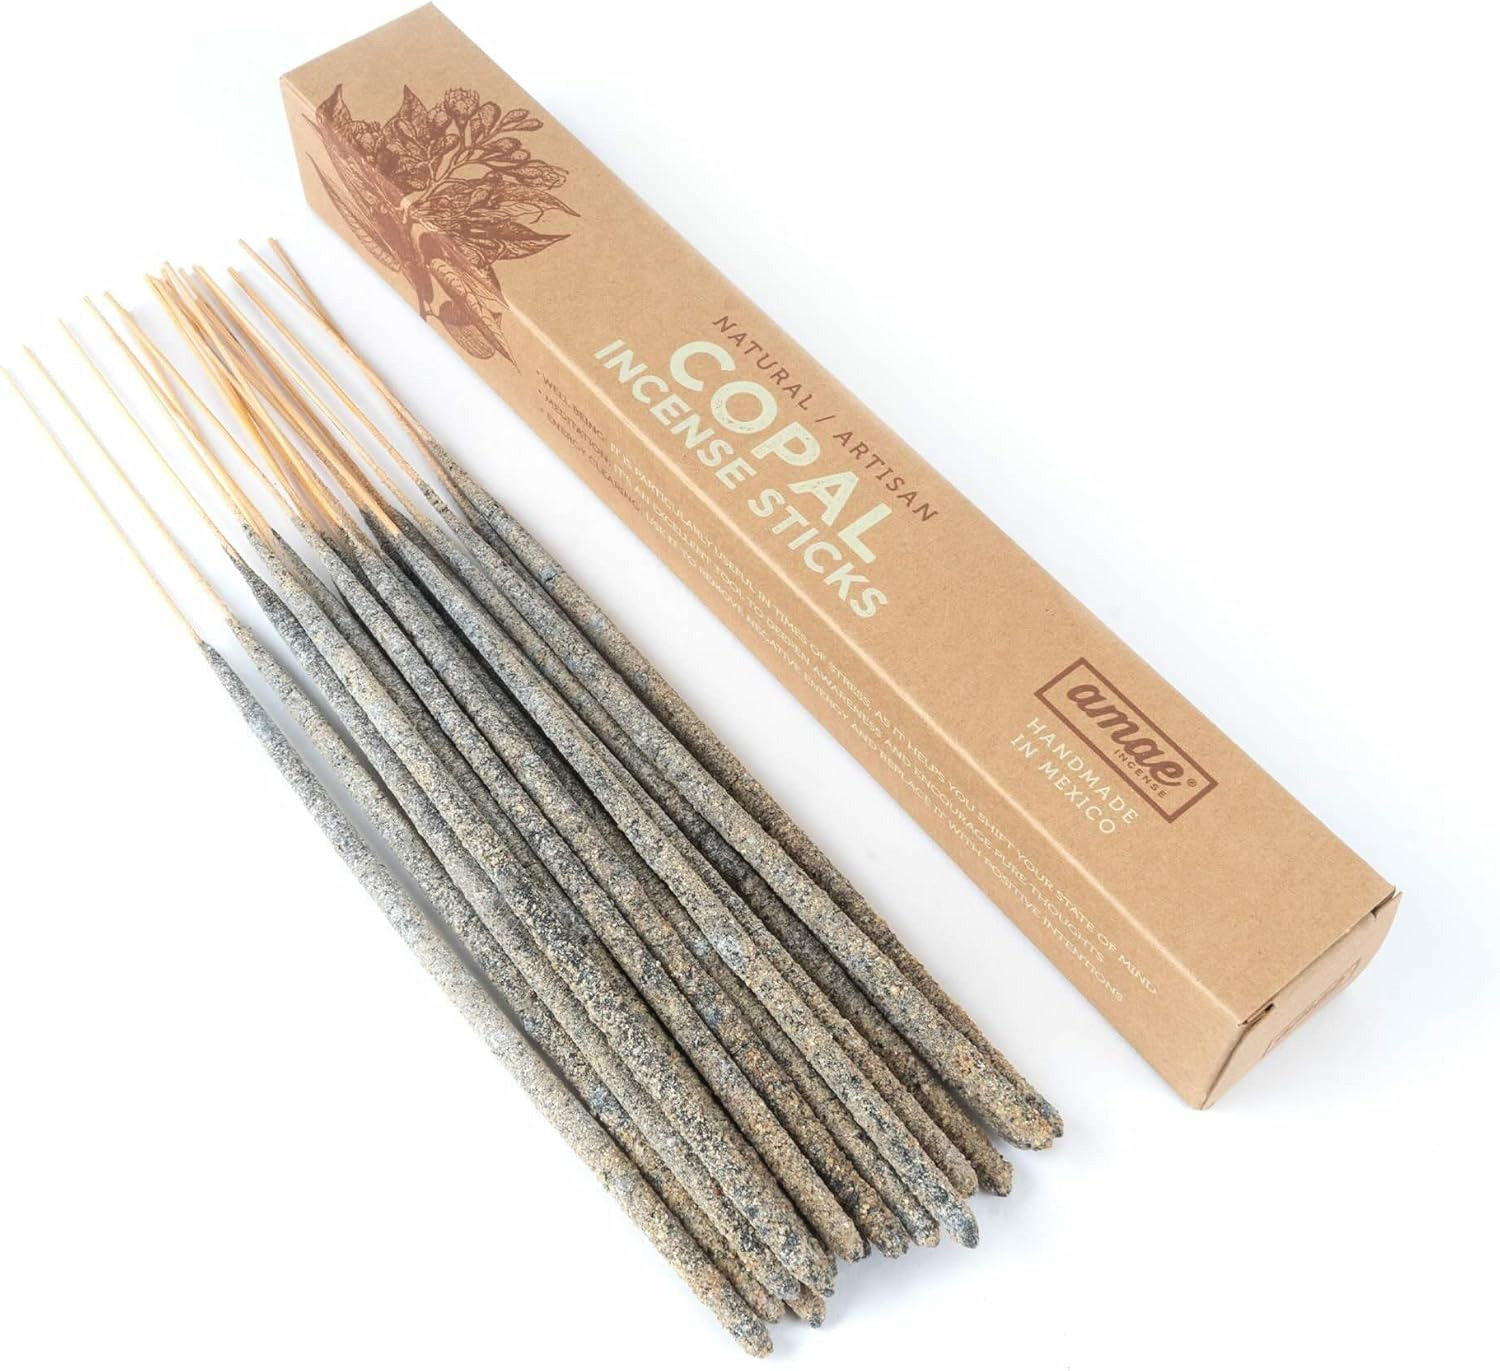 Incienso Copal Mexicano 20 Sticks Premium Mayan White Copal Incense Sticks from 